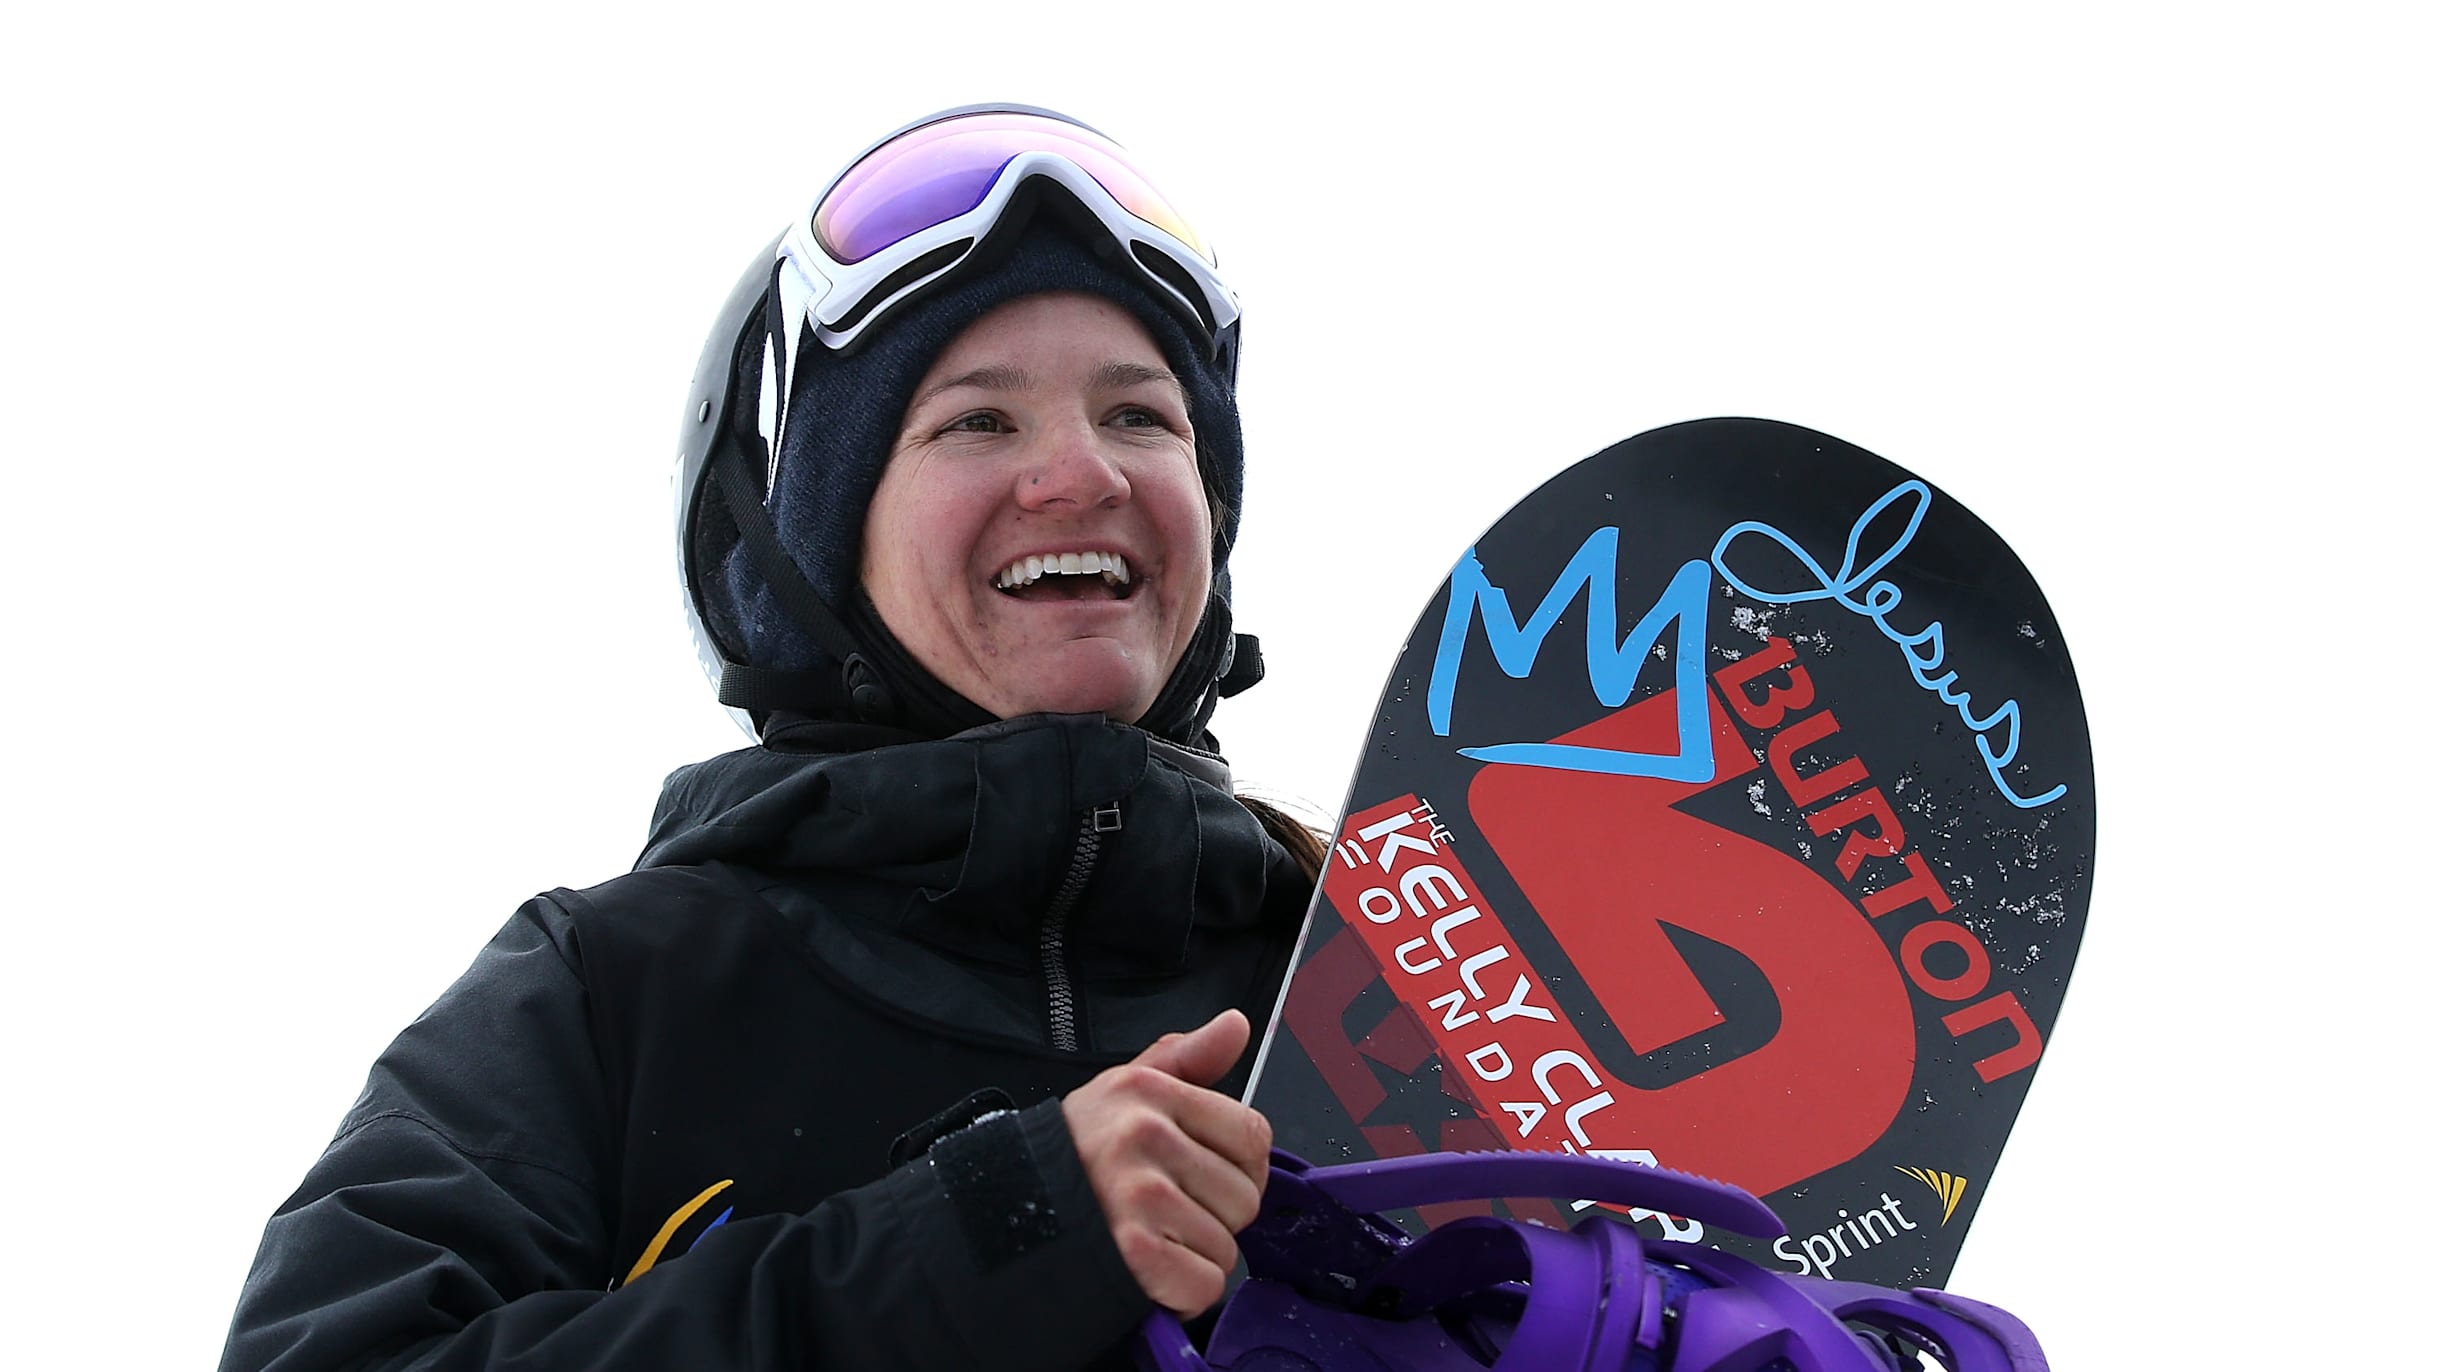 Burton Debuts the 2014 Olympic U.S. Snowboarding Team Uniforms